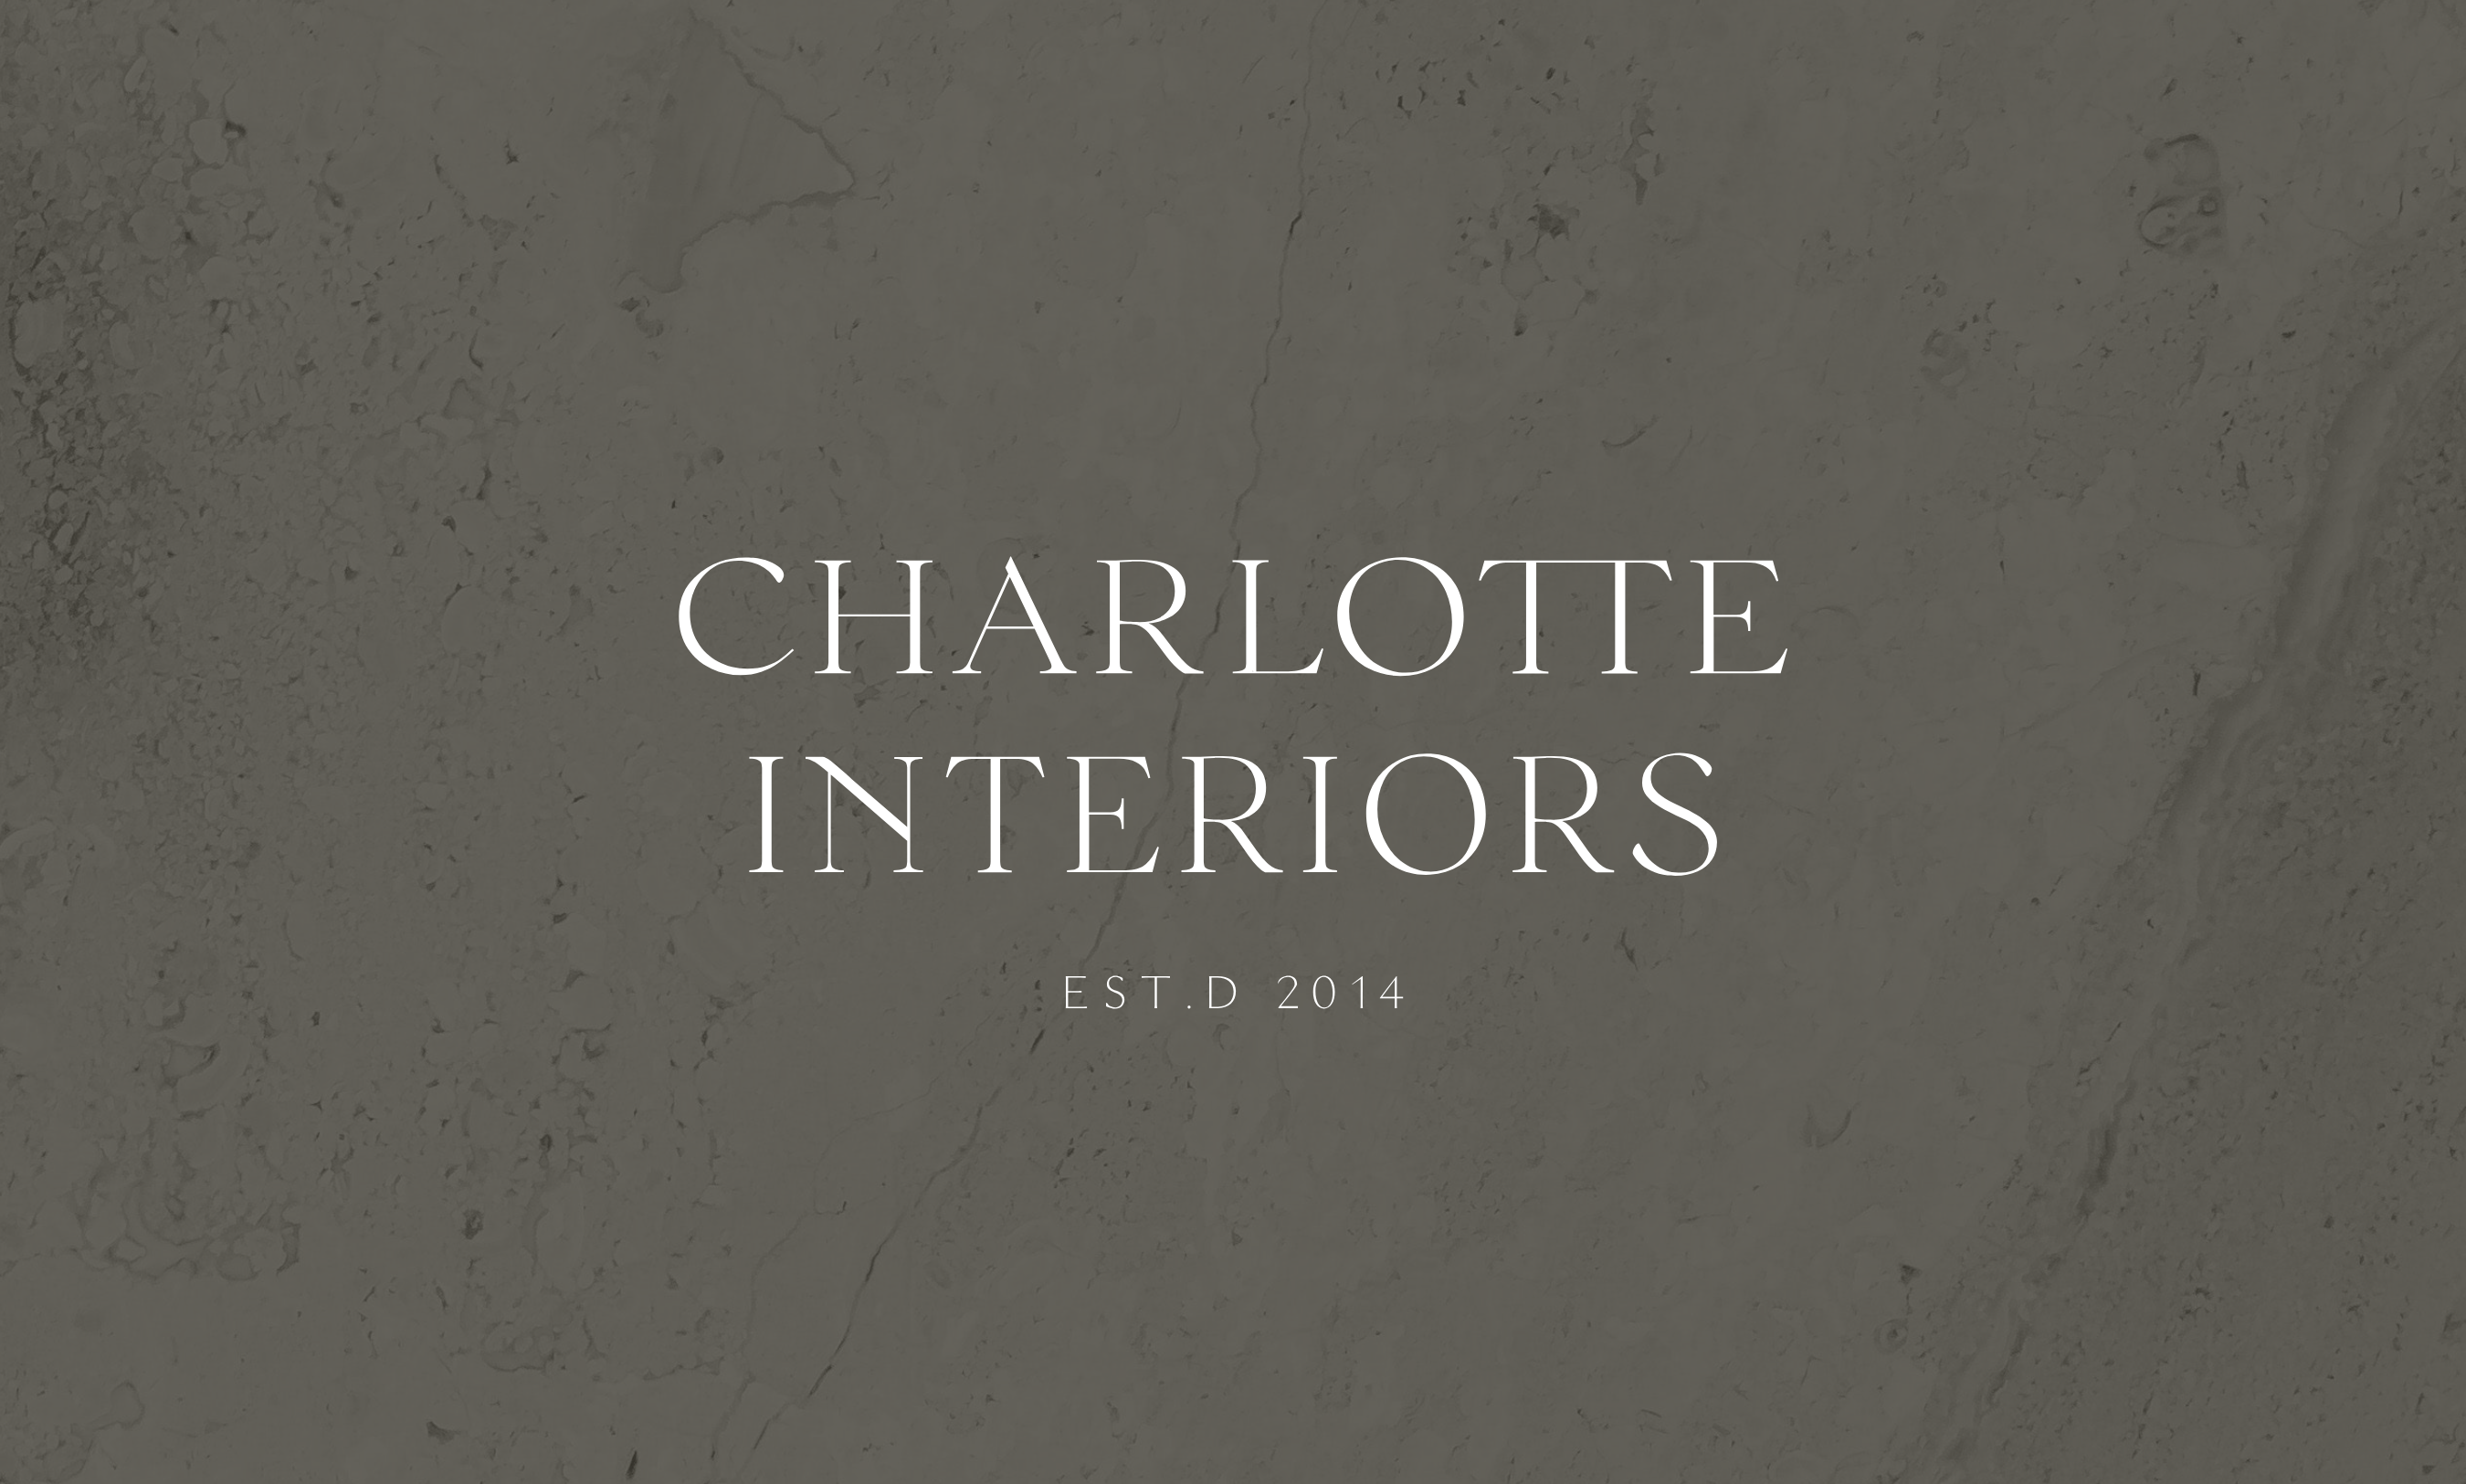 Charlotte Interiors - Minimalist Brand Design for Home Staging and Interior Design Studio by Sarah Ann Design